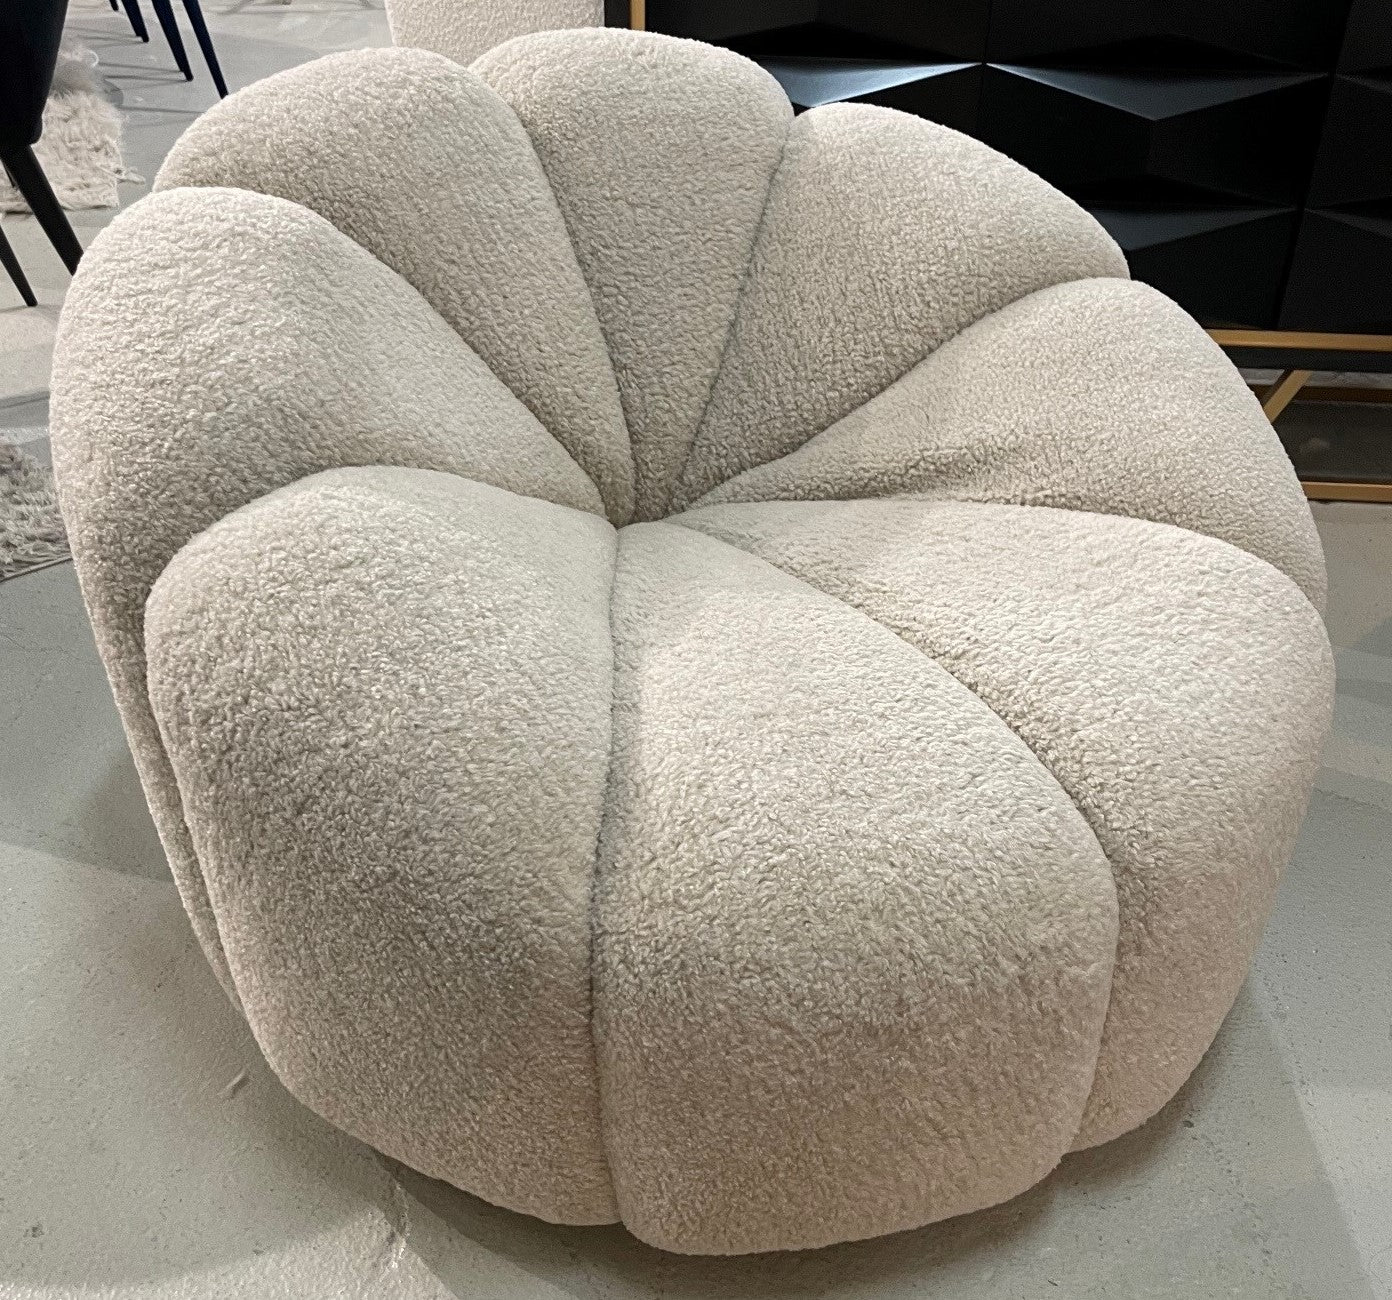 Marshmellow Swivel Chair - Future Classics Furniture